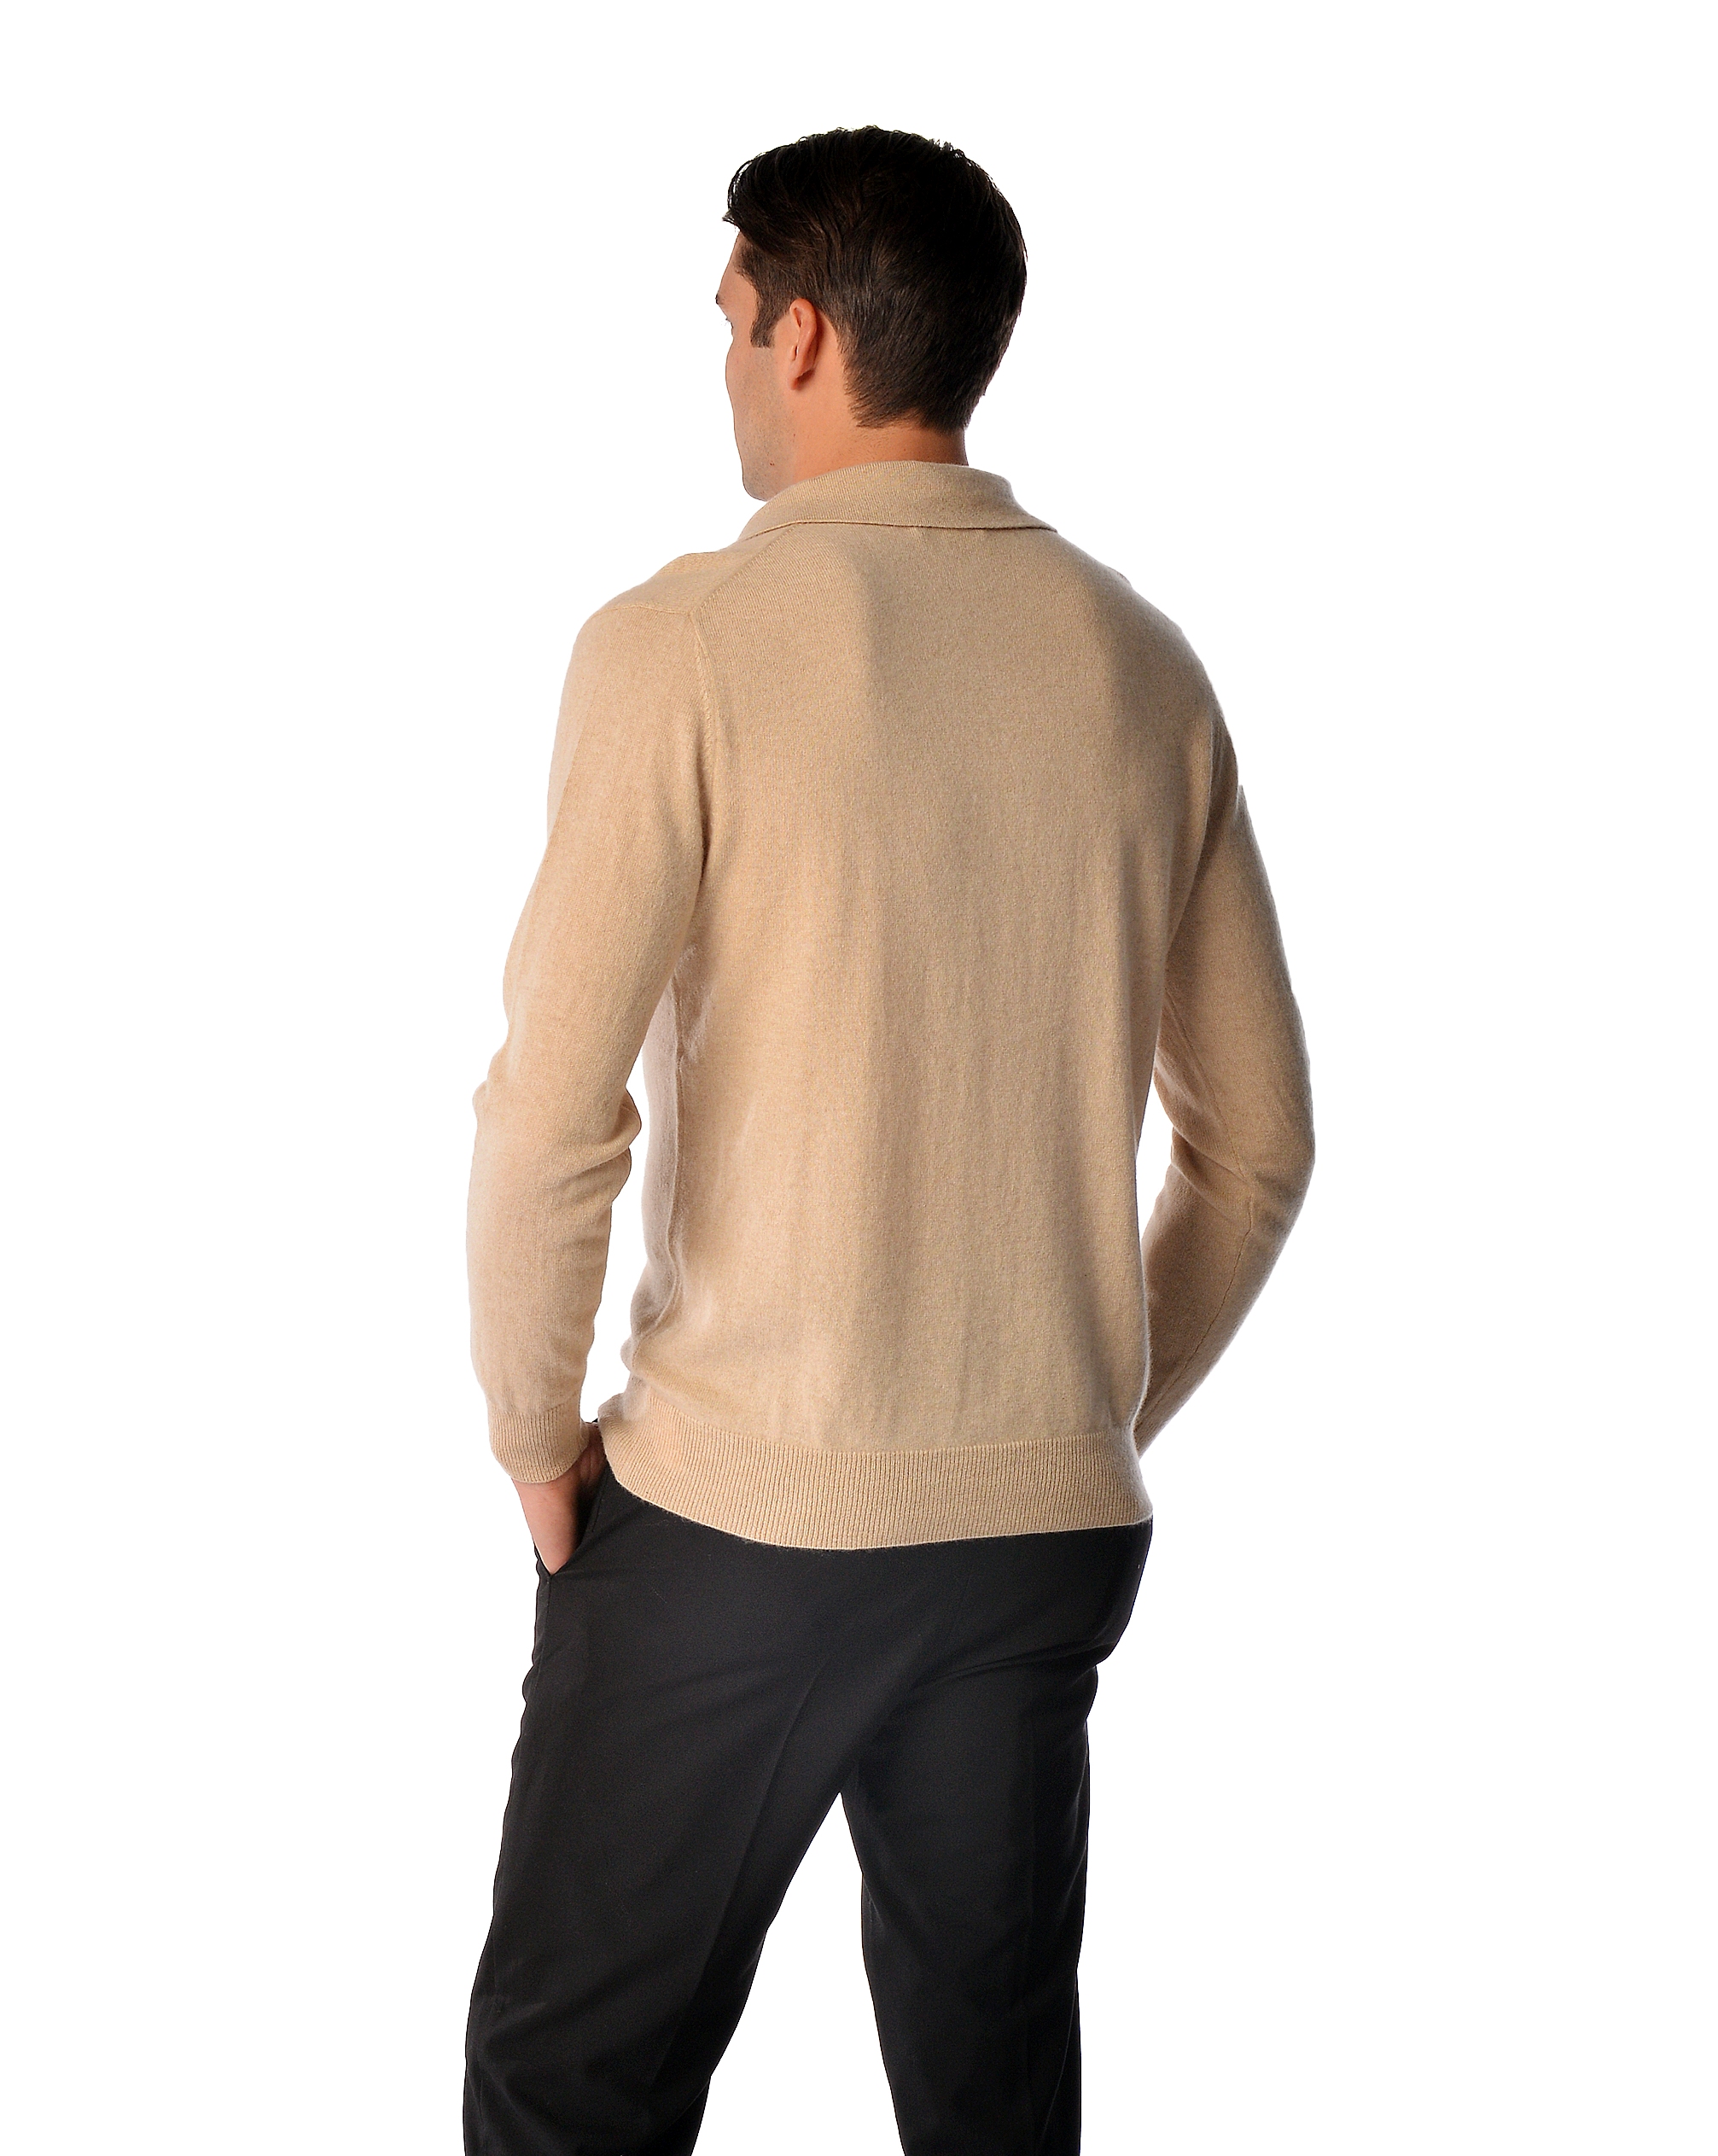 Men\'s Pure Cashmere Polo Sweater (Black, Large)